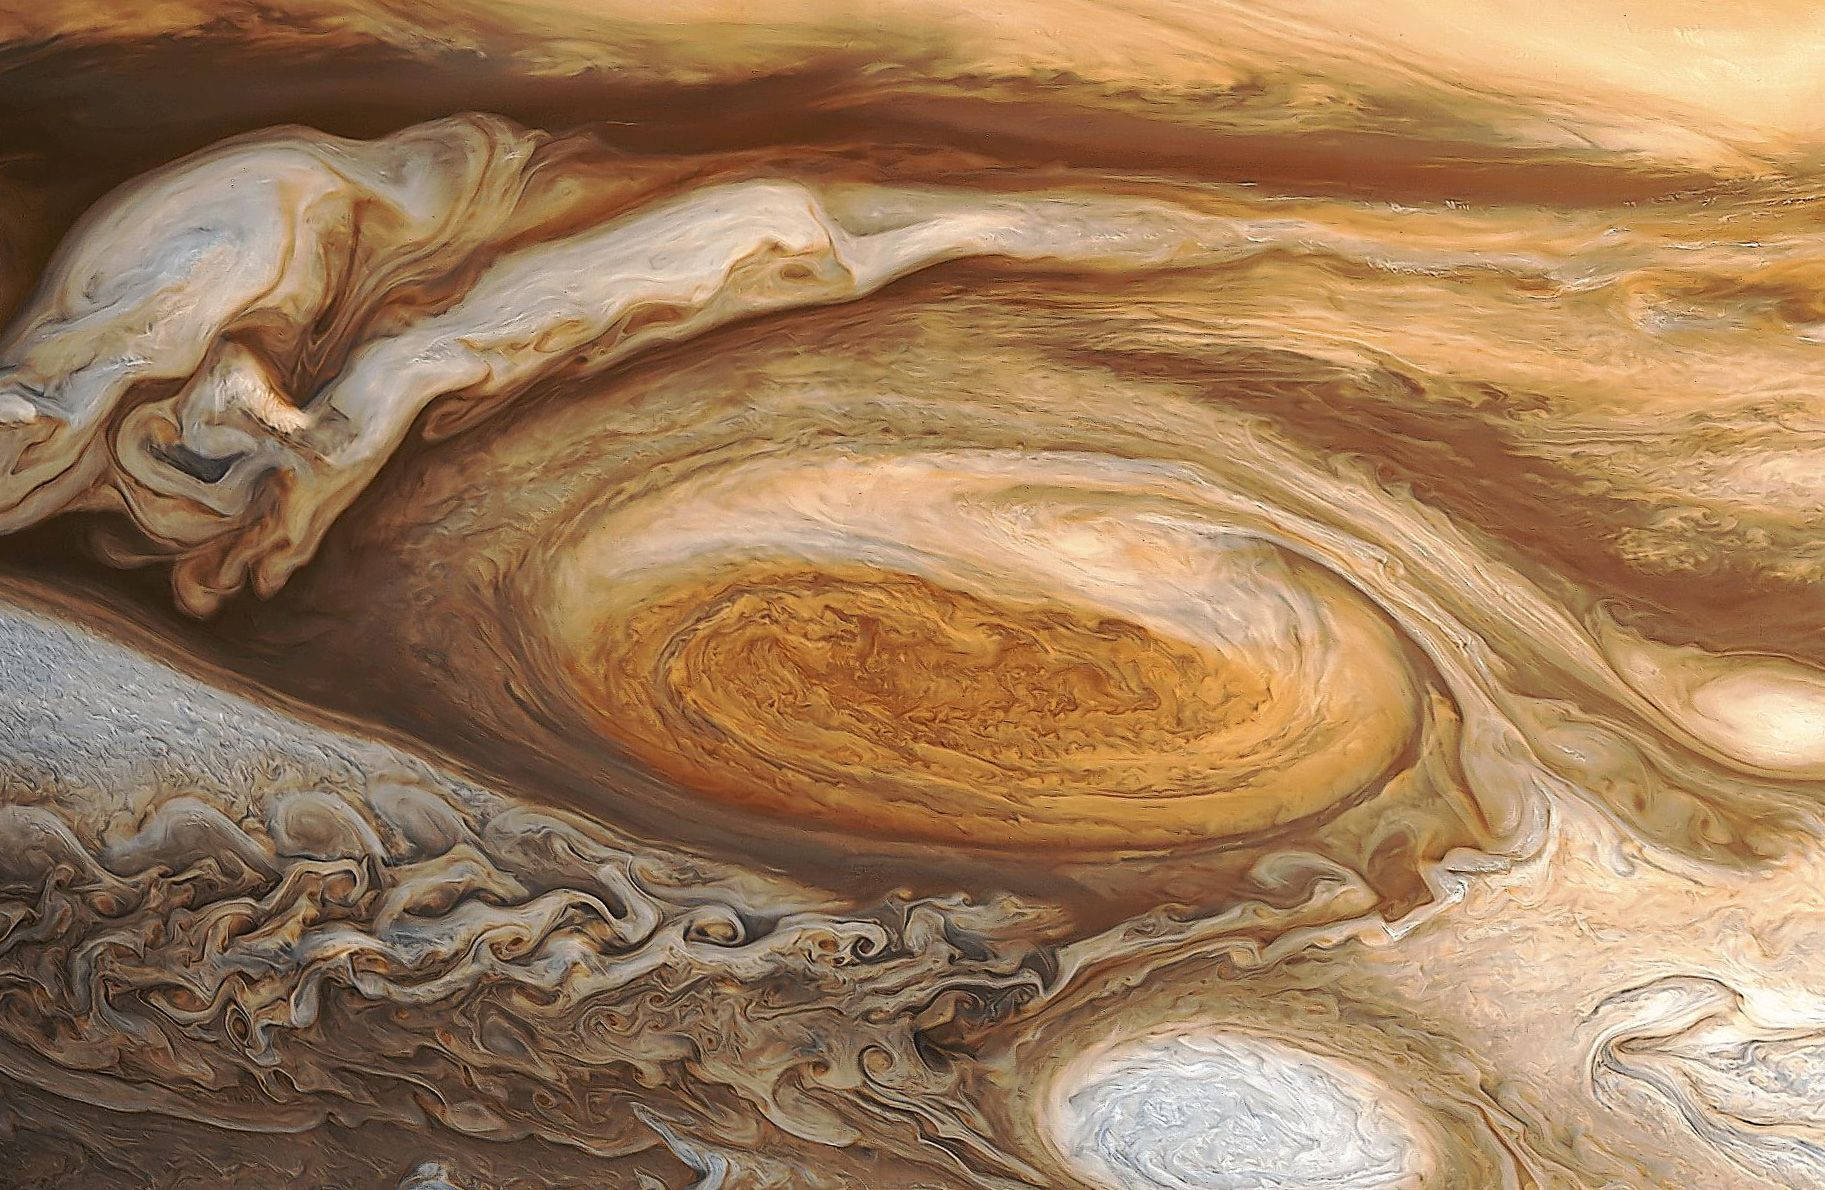 Jupiter's Great Red Spot Background